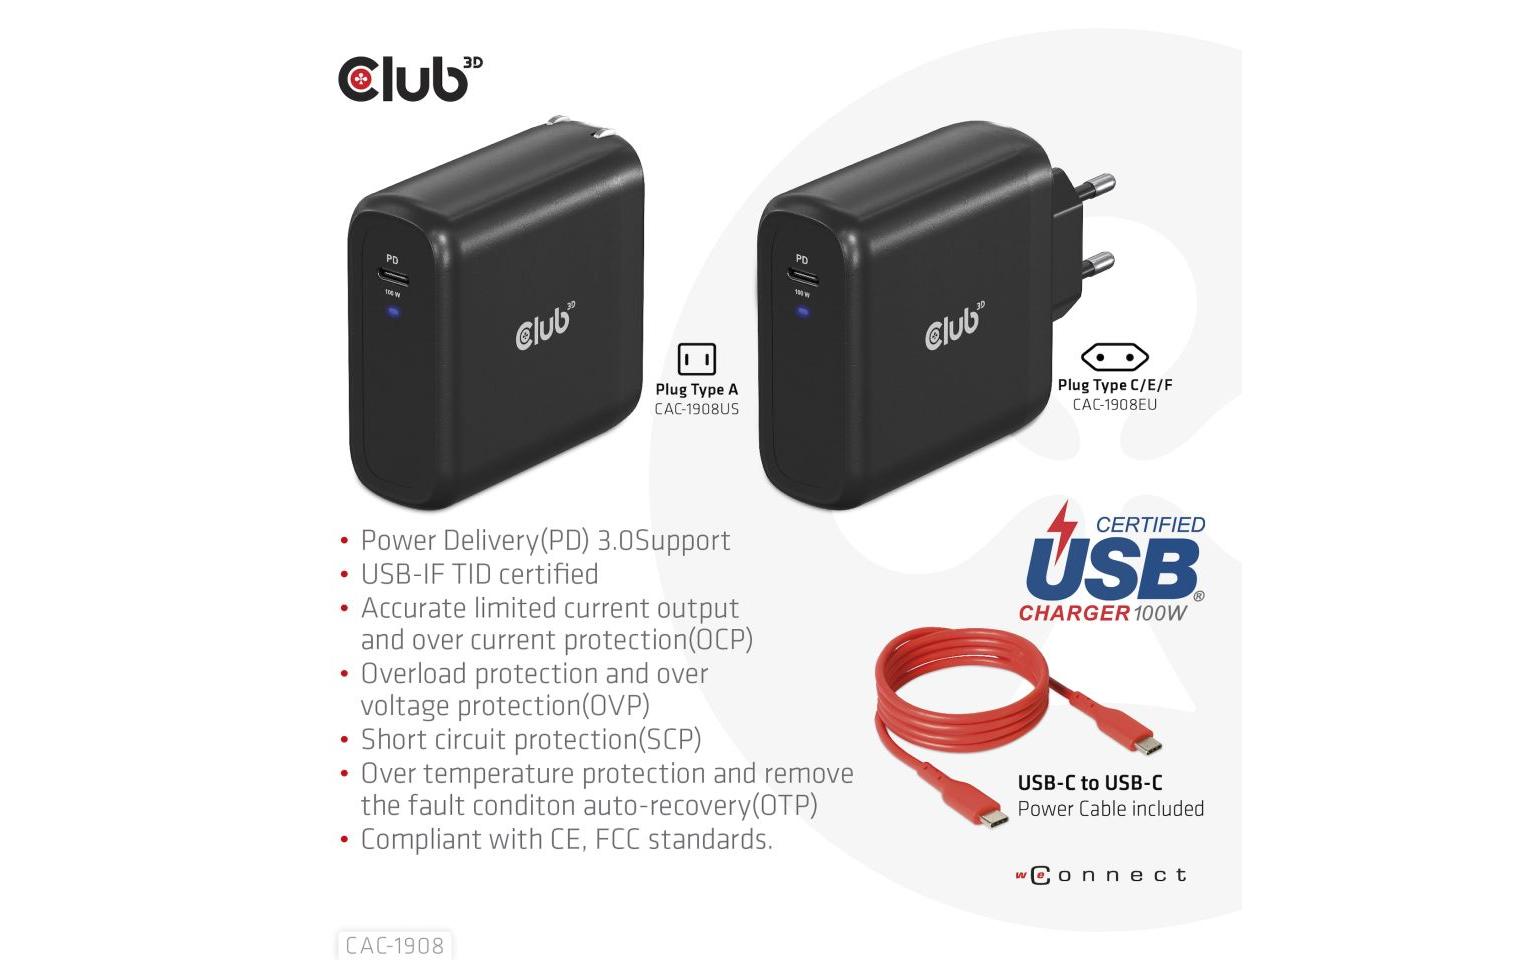 Club 3D USB-Wandladegerät CAC-1908